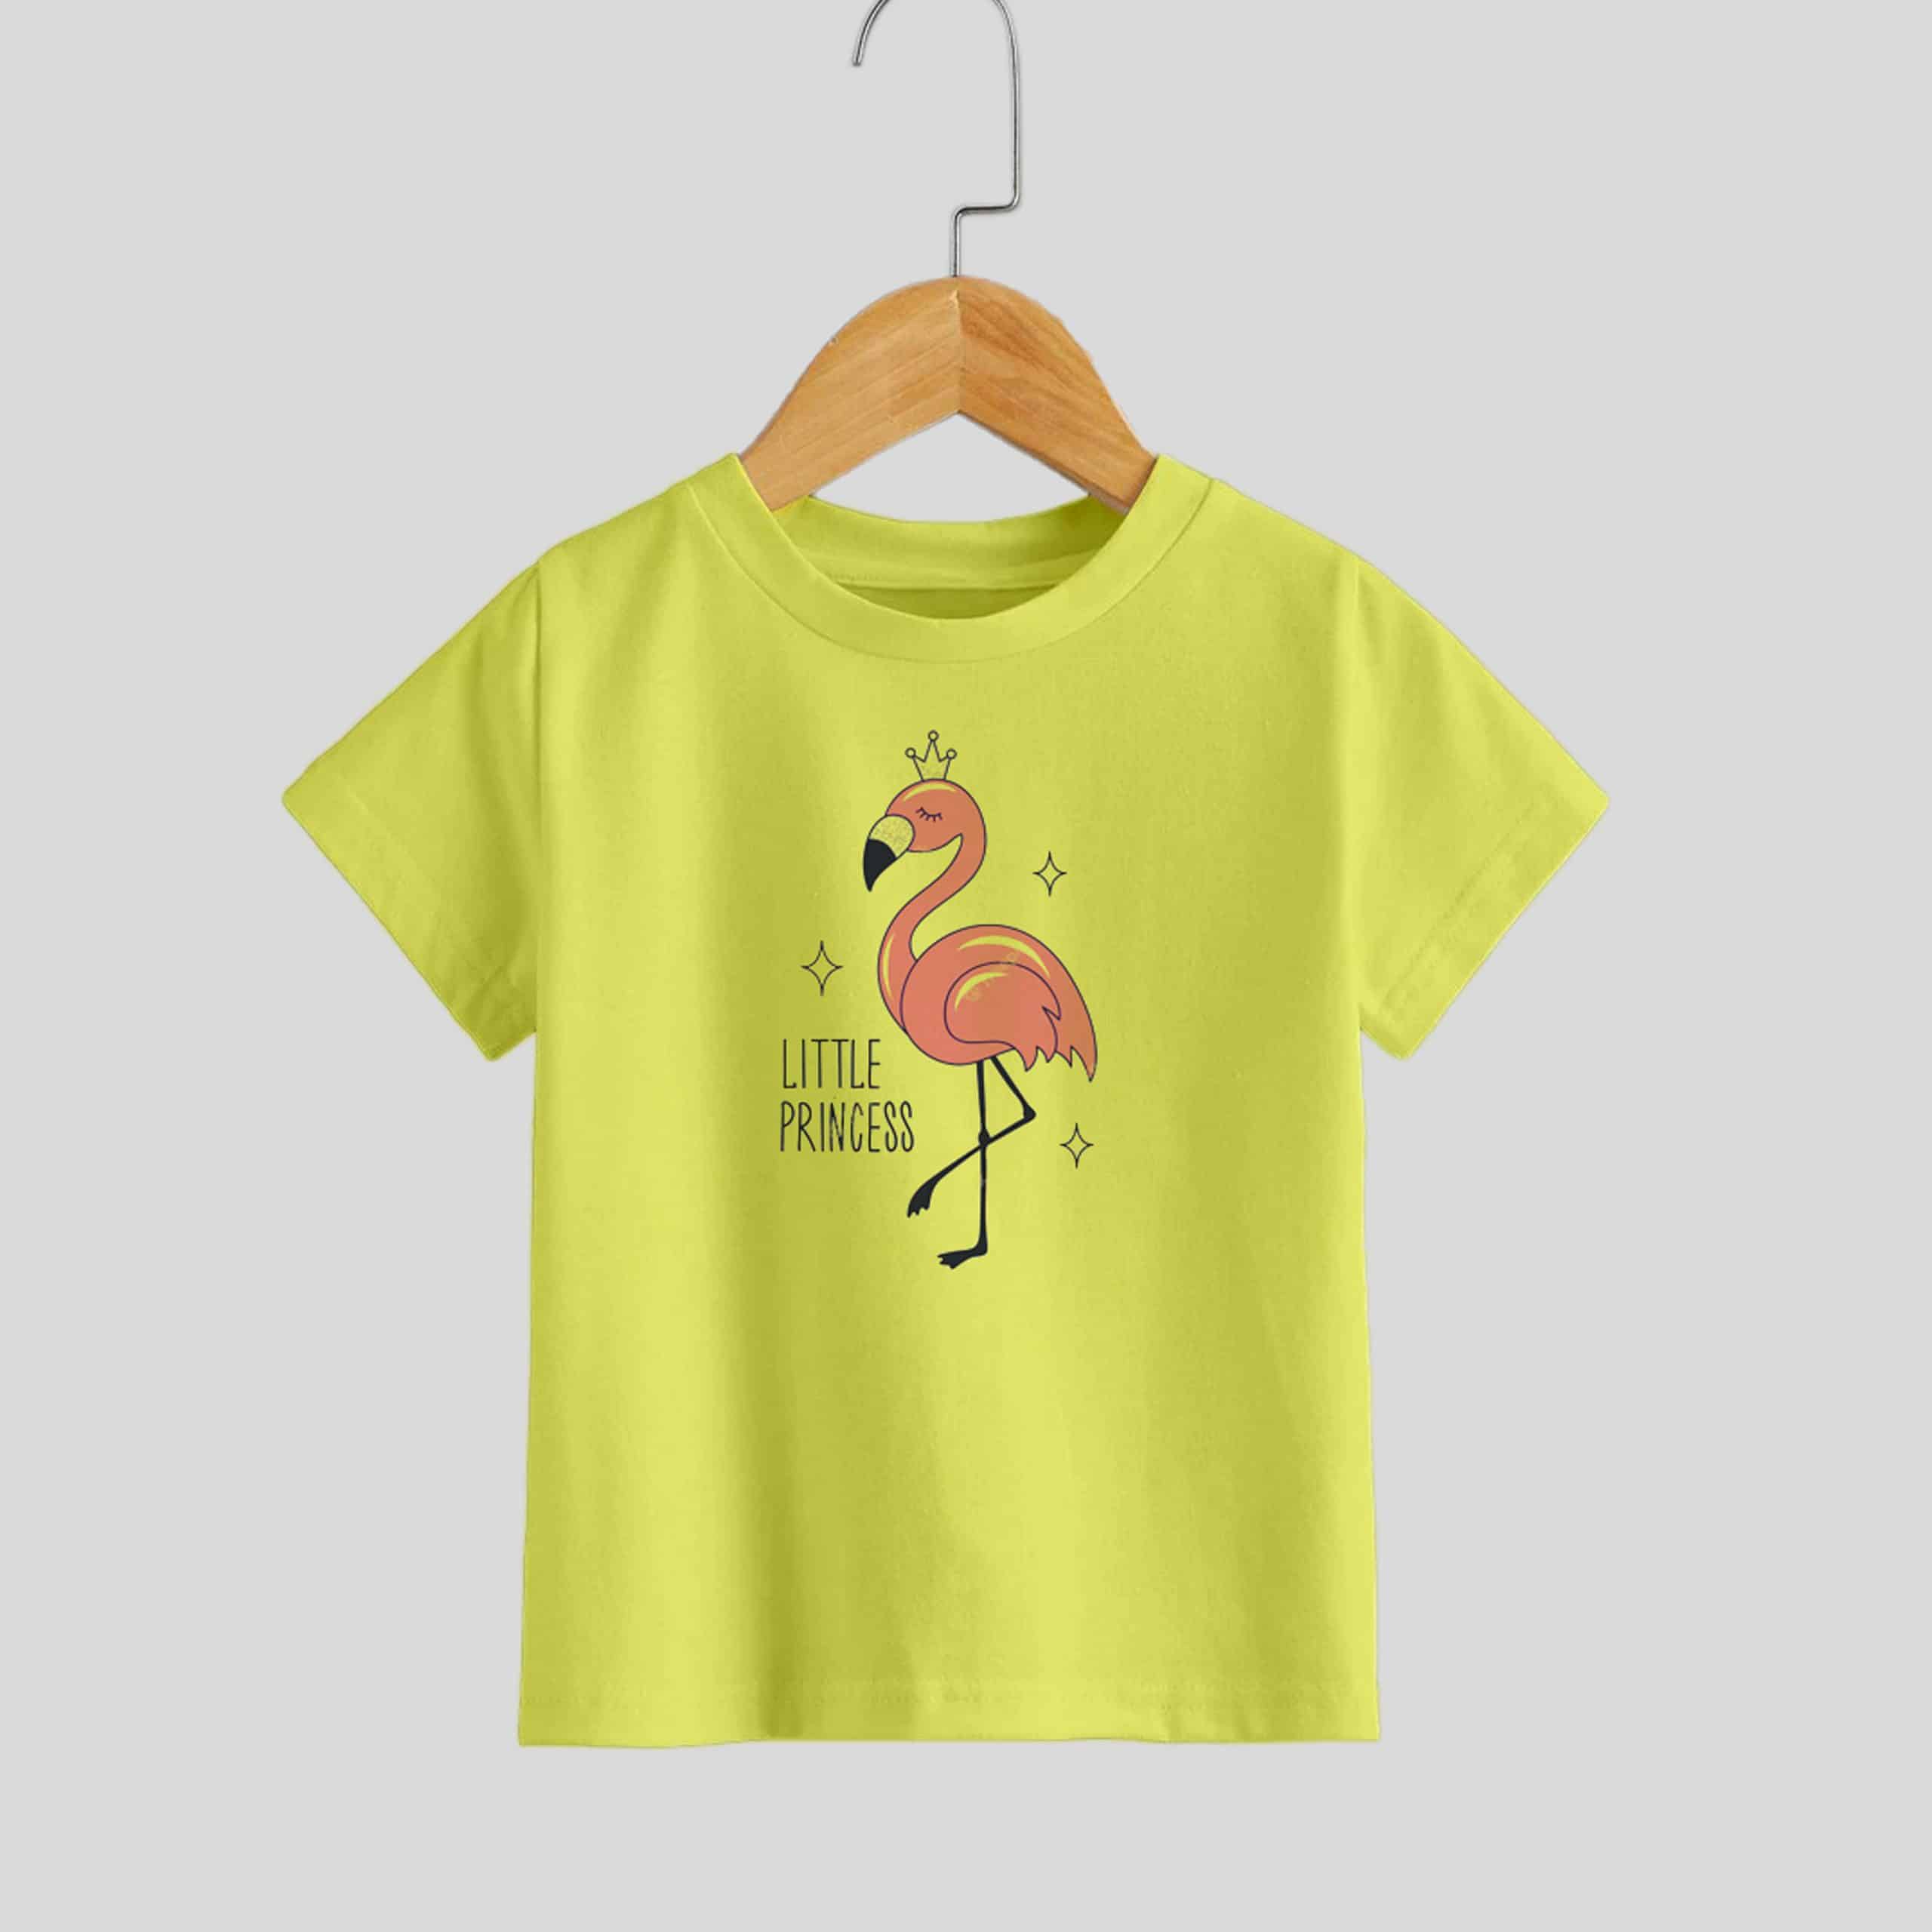 Girls swarm print yellow T-shirt for casual wear-RKFCW195